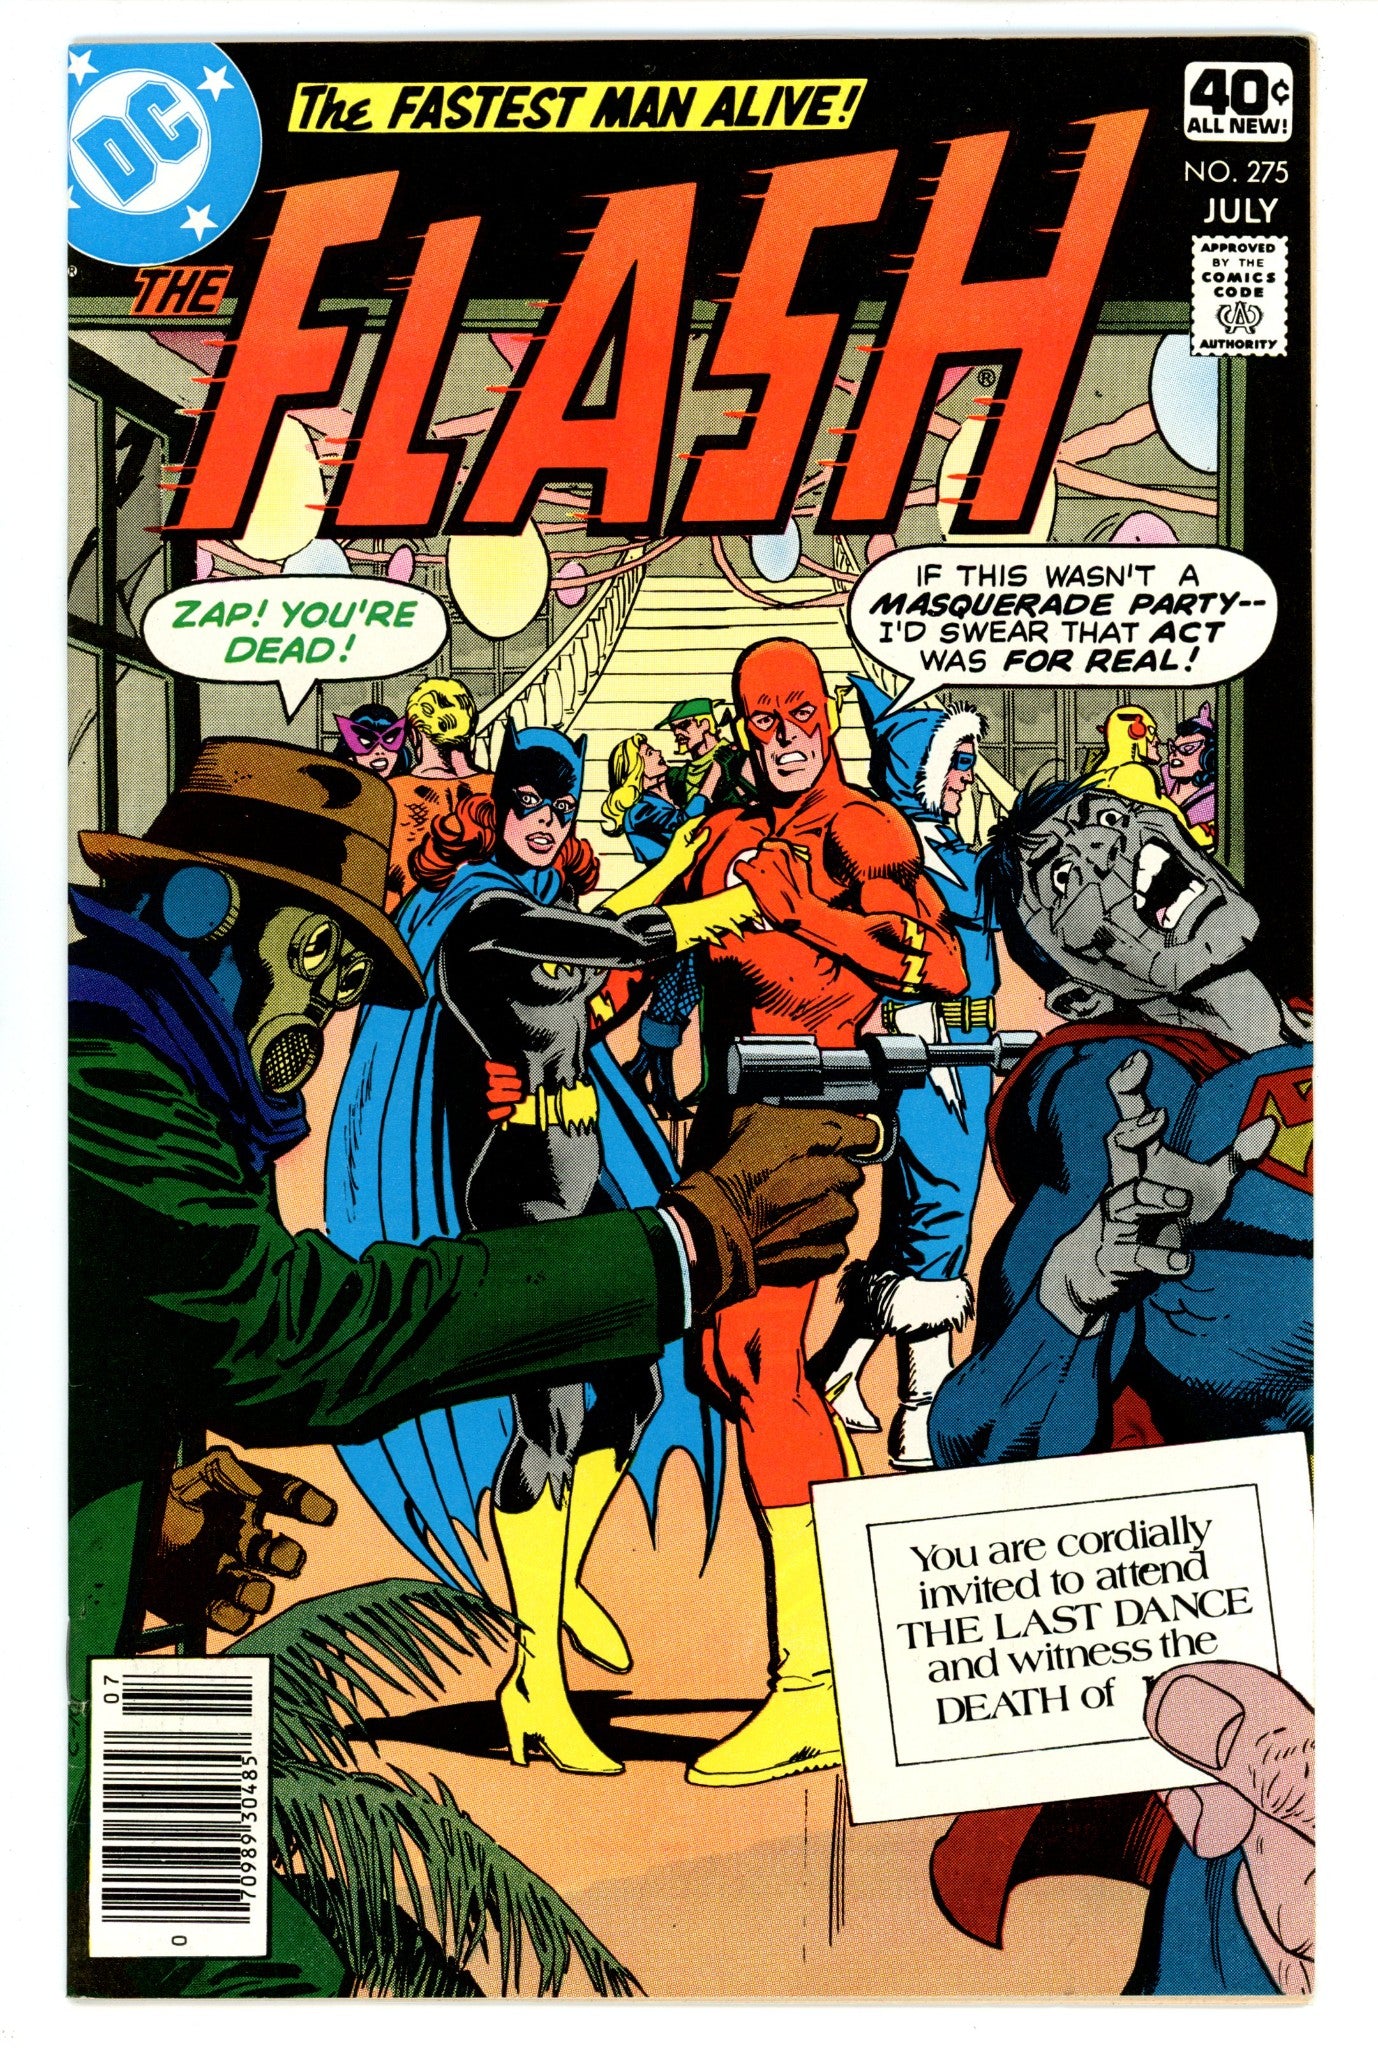 The Flash Vol 1 275 VF+ (8.5) (1979) 